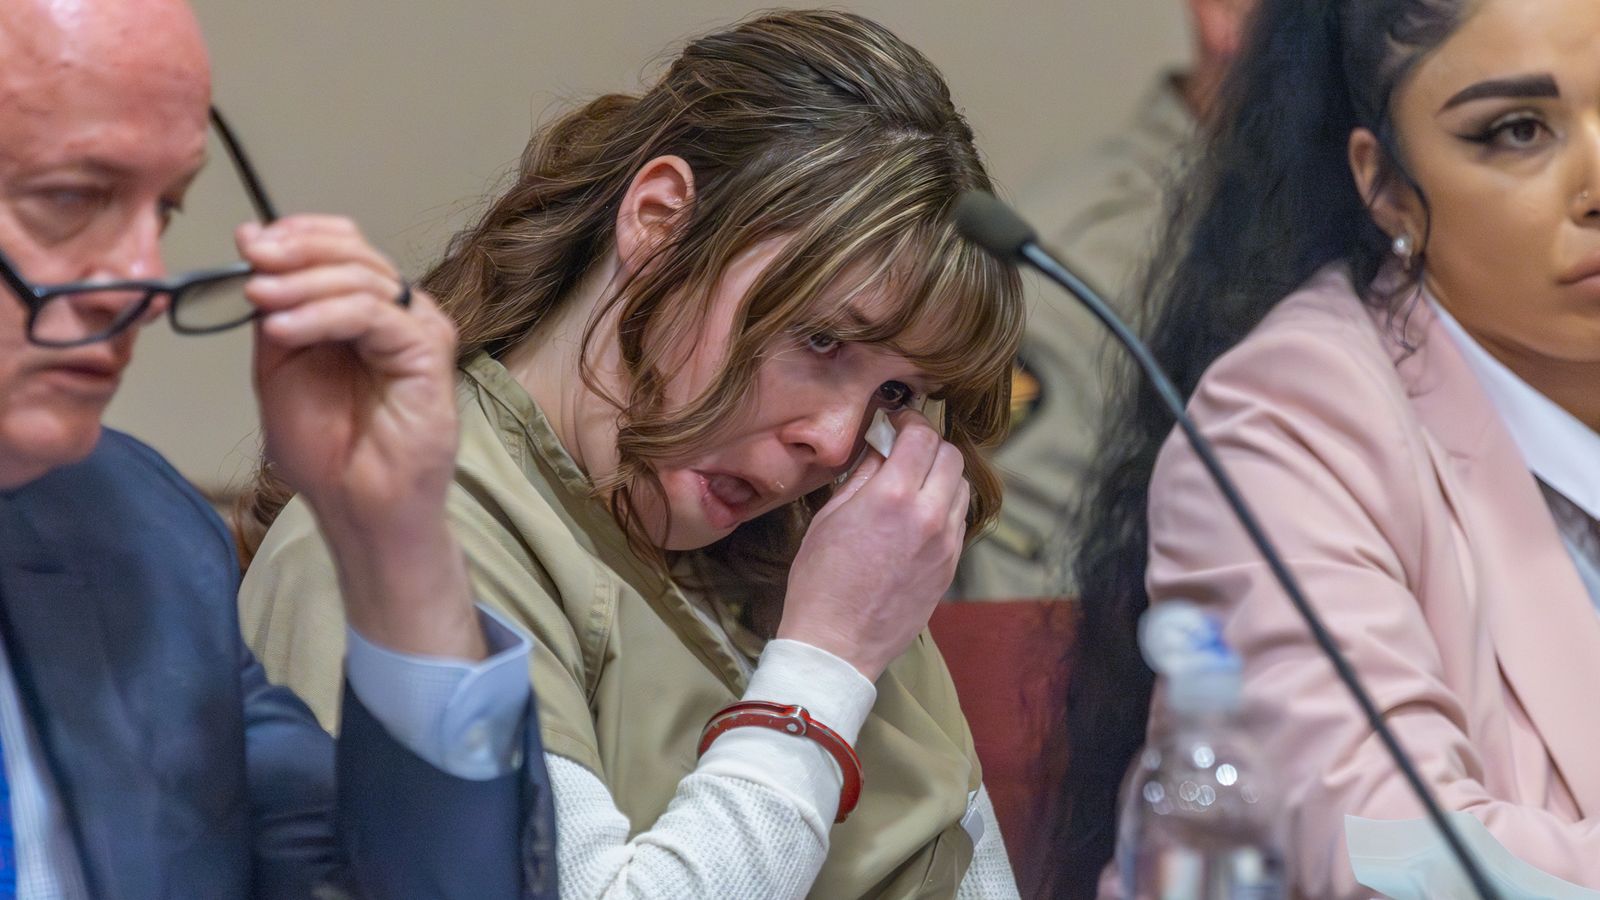 Rust weapons supervisor Hannah Gutierrez jailed over fatal shooting on Alec Baldwin film set